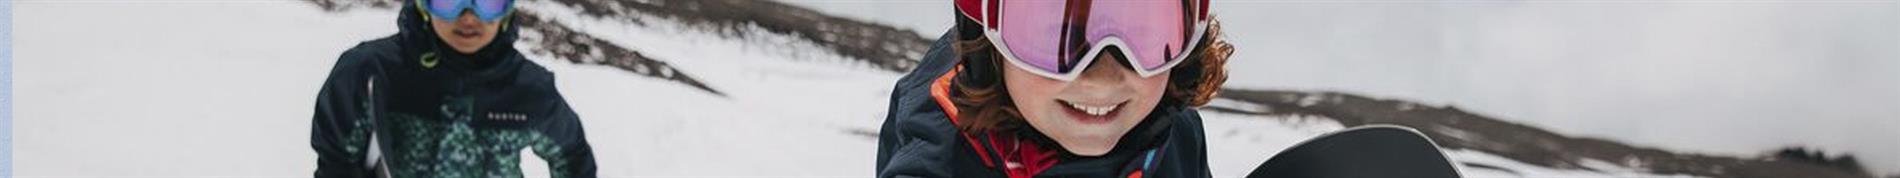 Volcom Kids Ski & Snowboard Clothing (Ages 6-16) 